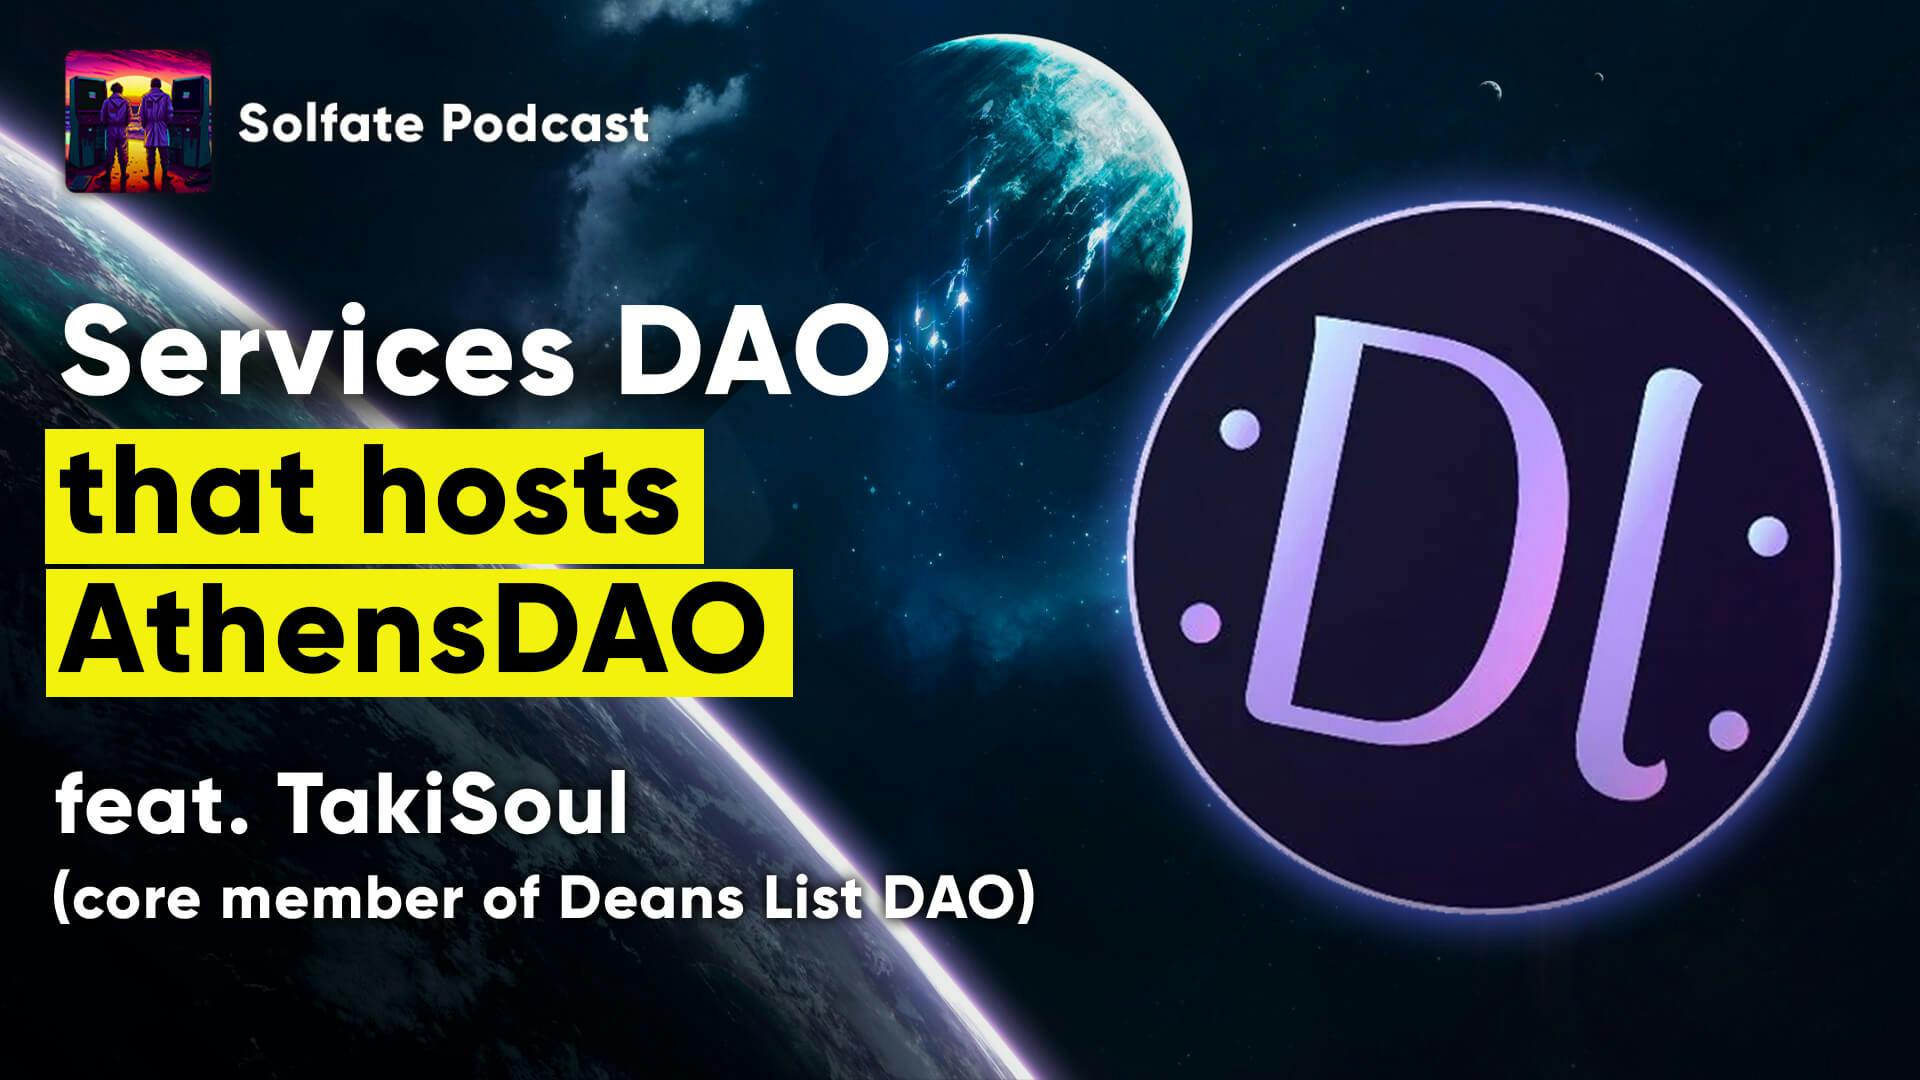 Dean's List DAO: Services DAO that hosts AthensDAO